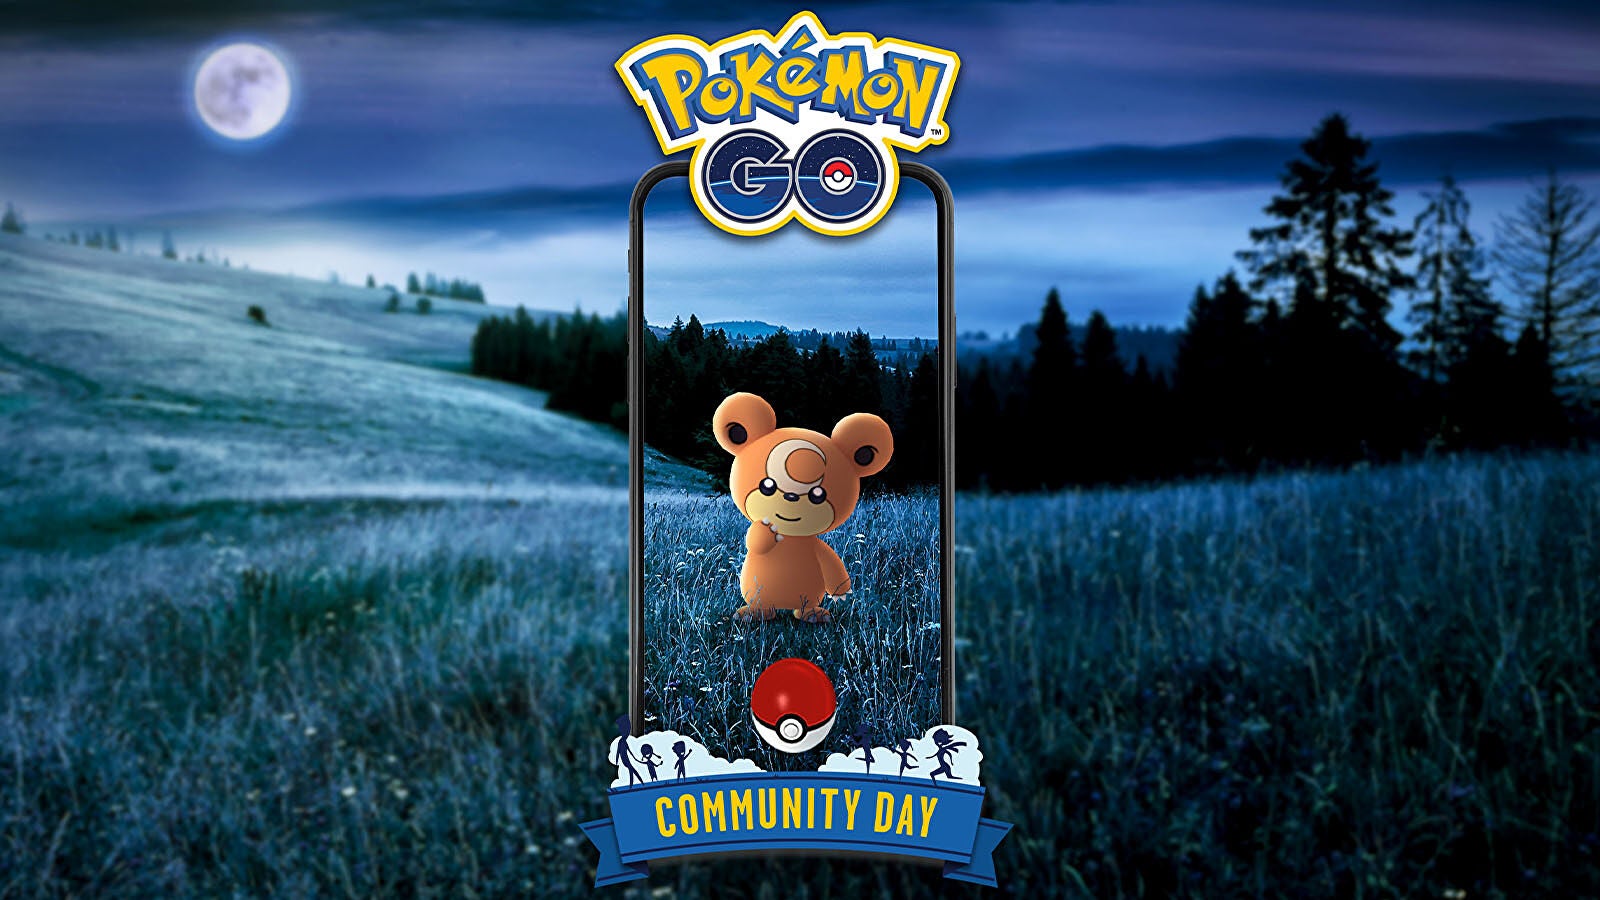 Afbeeldingen van Pokémon Go Community Day november 2022 en alle voorgaande Community Day Pokémon en moves